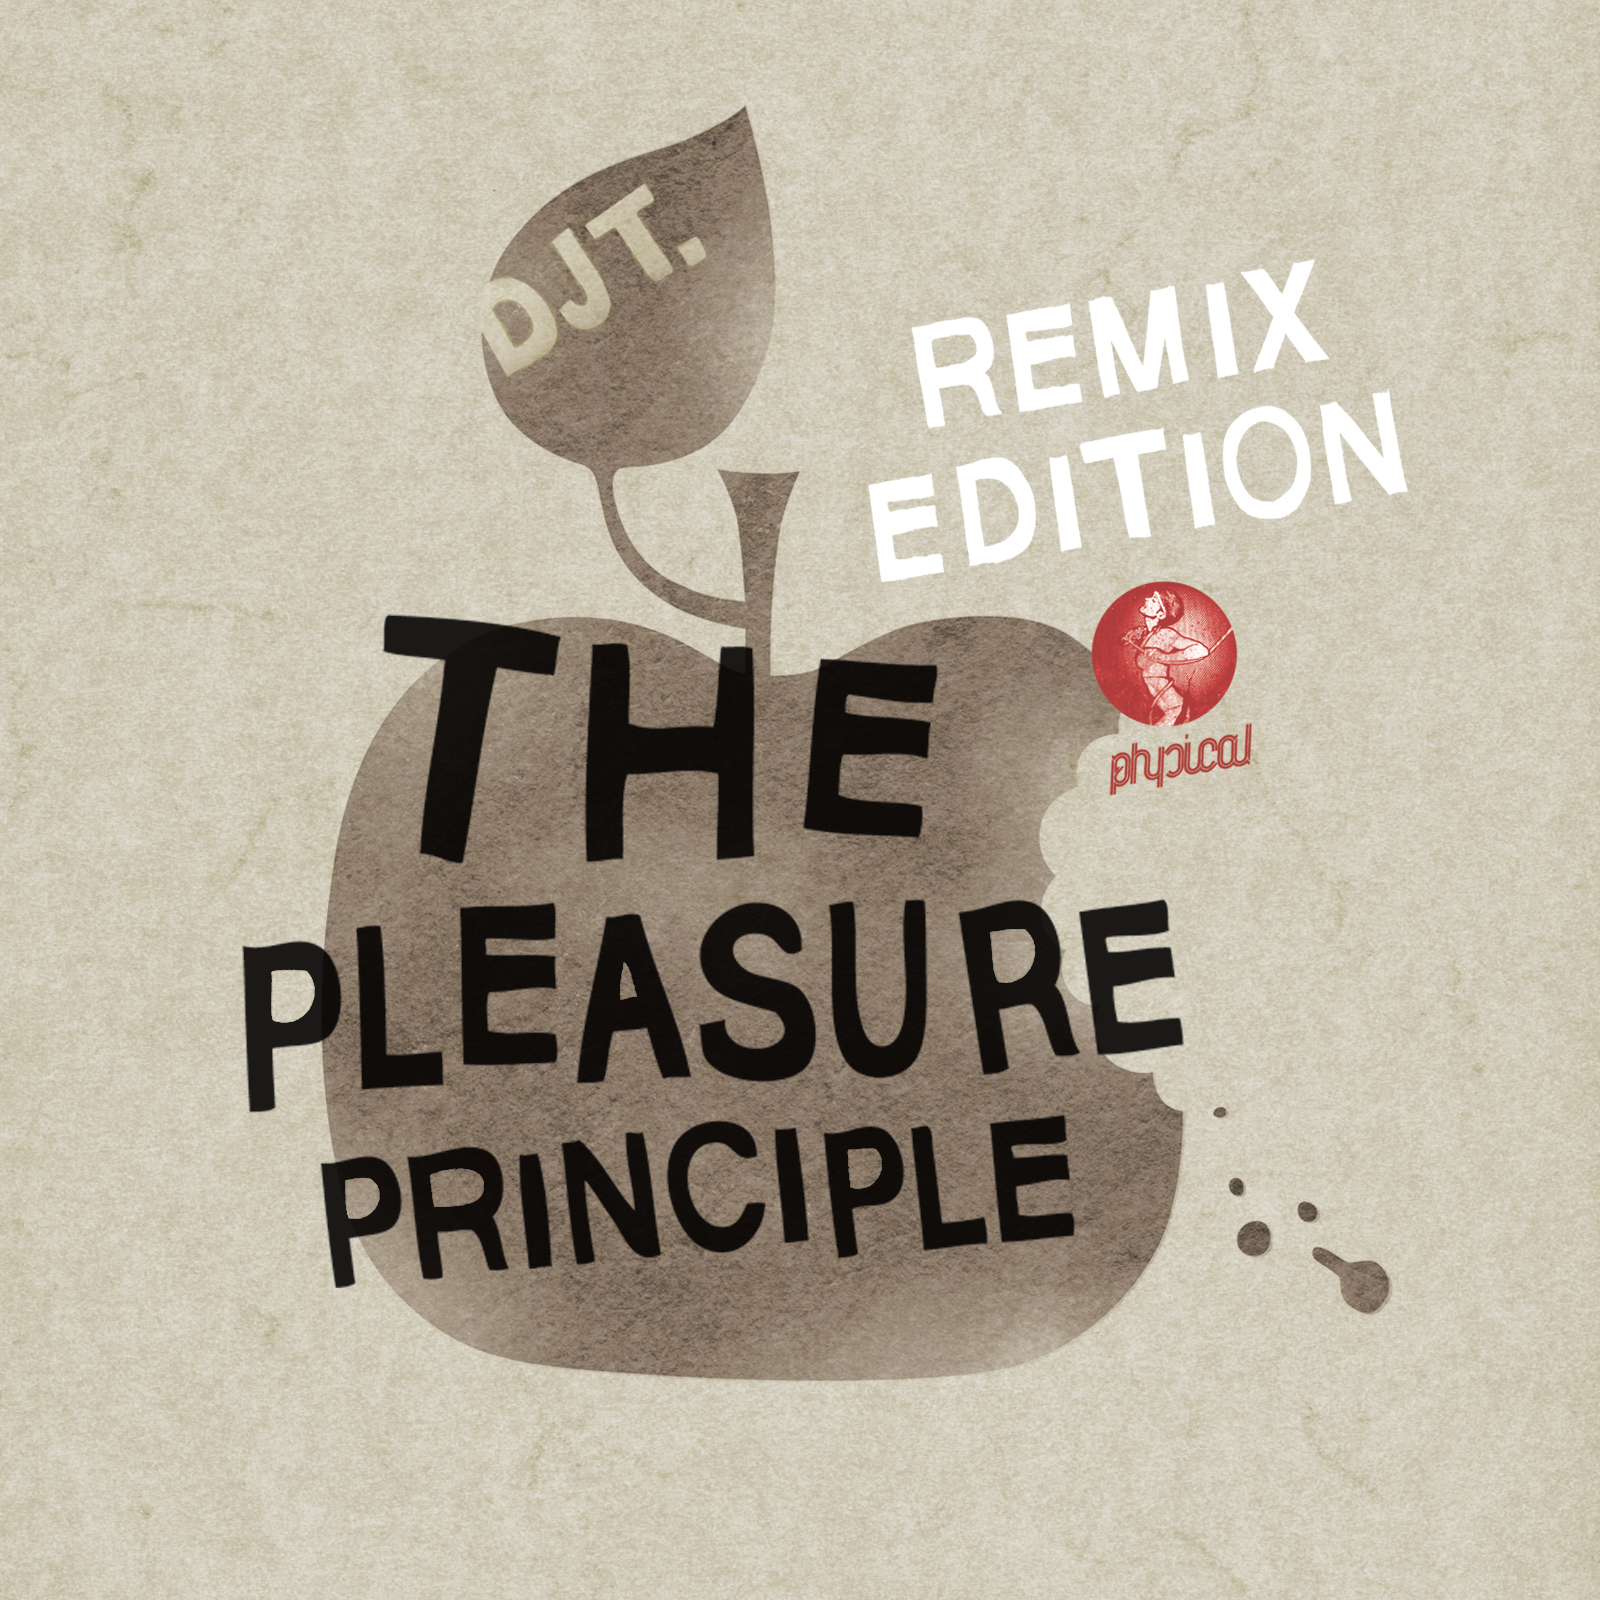 DJ T - The pleasure principle (Remix Edition)